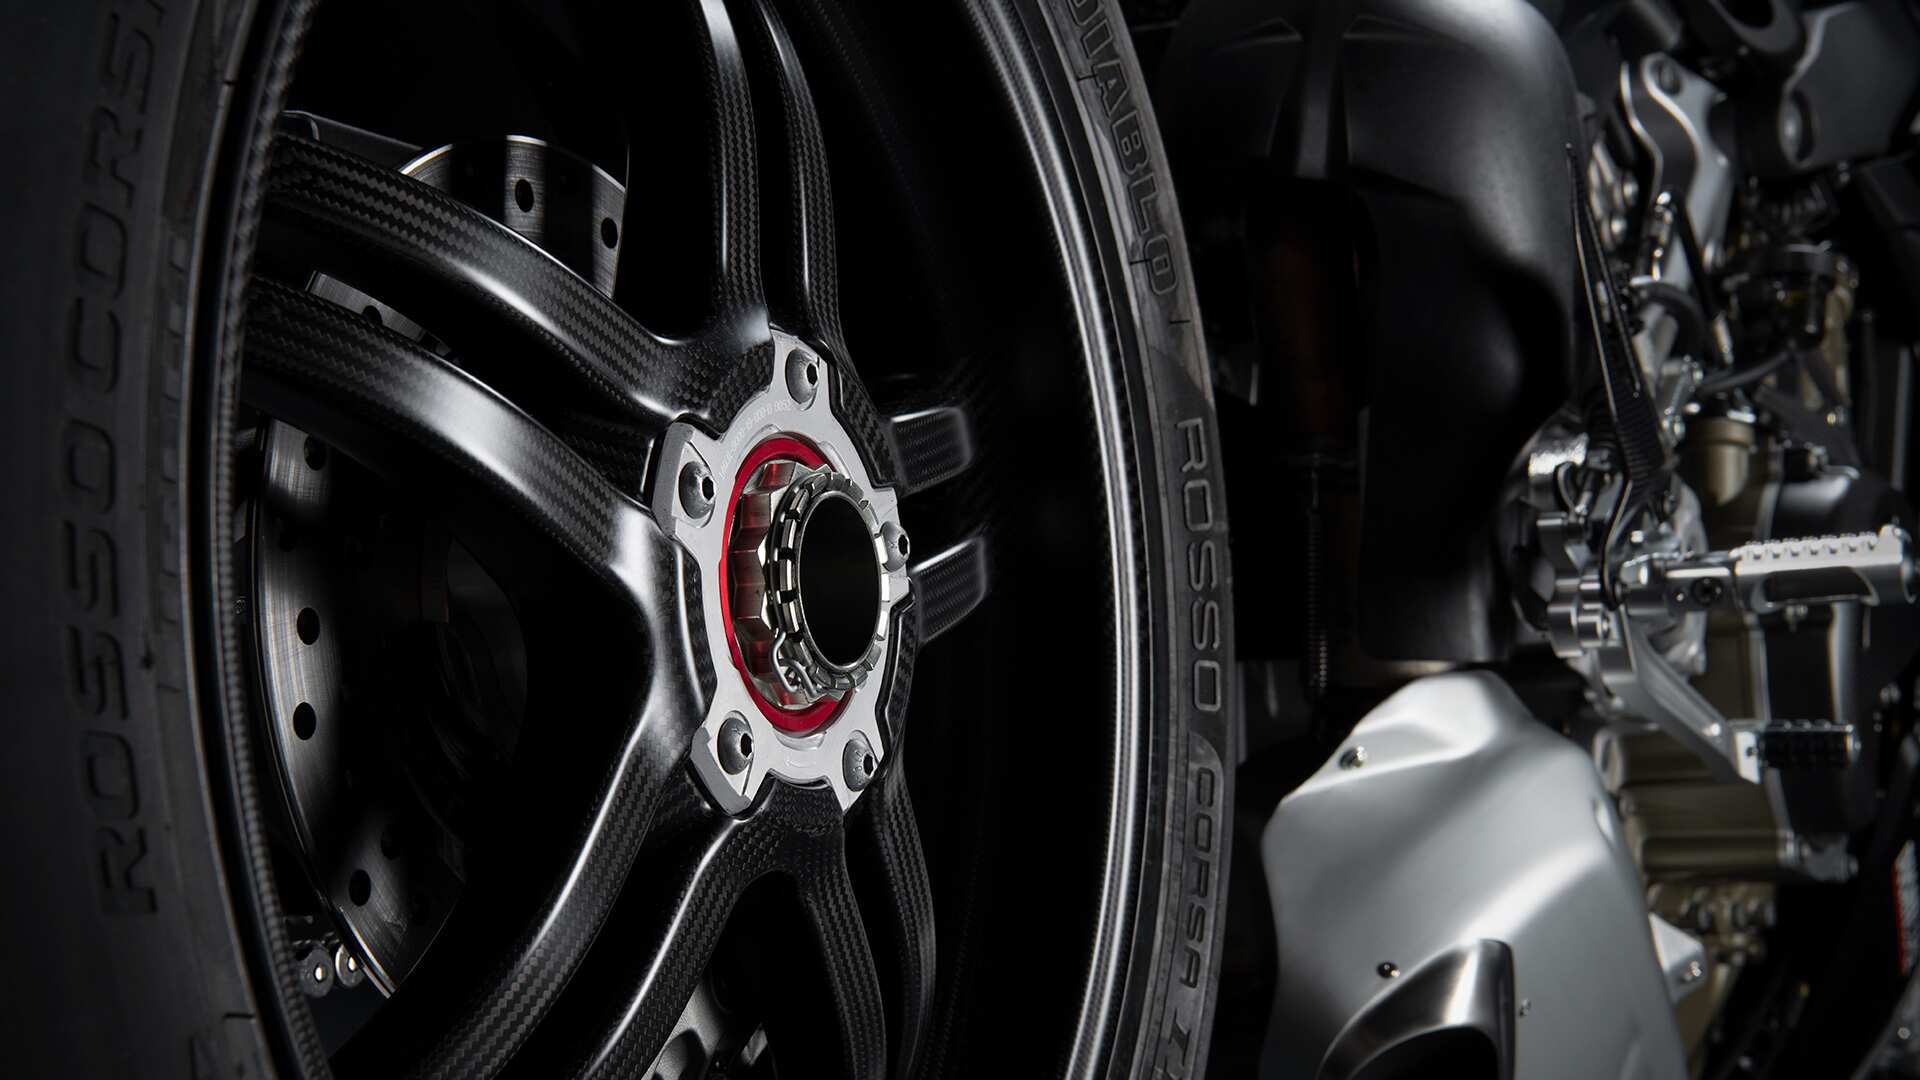 Ducati Streetfighter V4 SP: Company's Statement